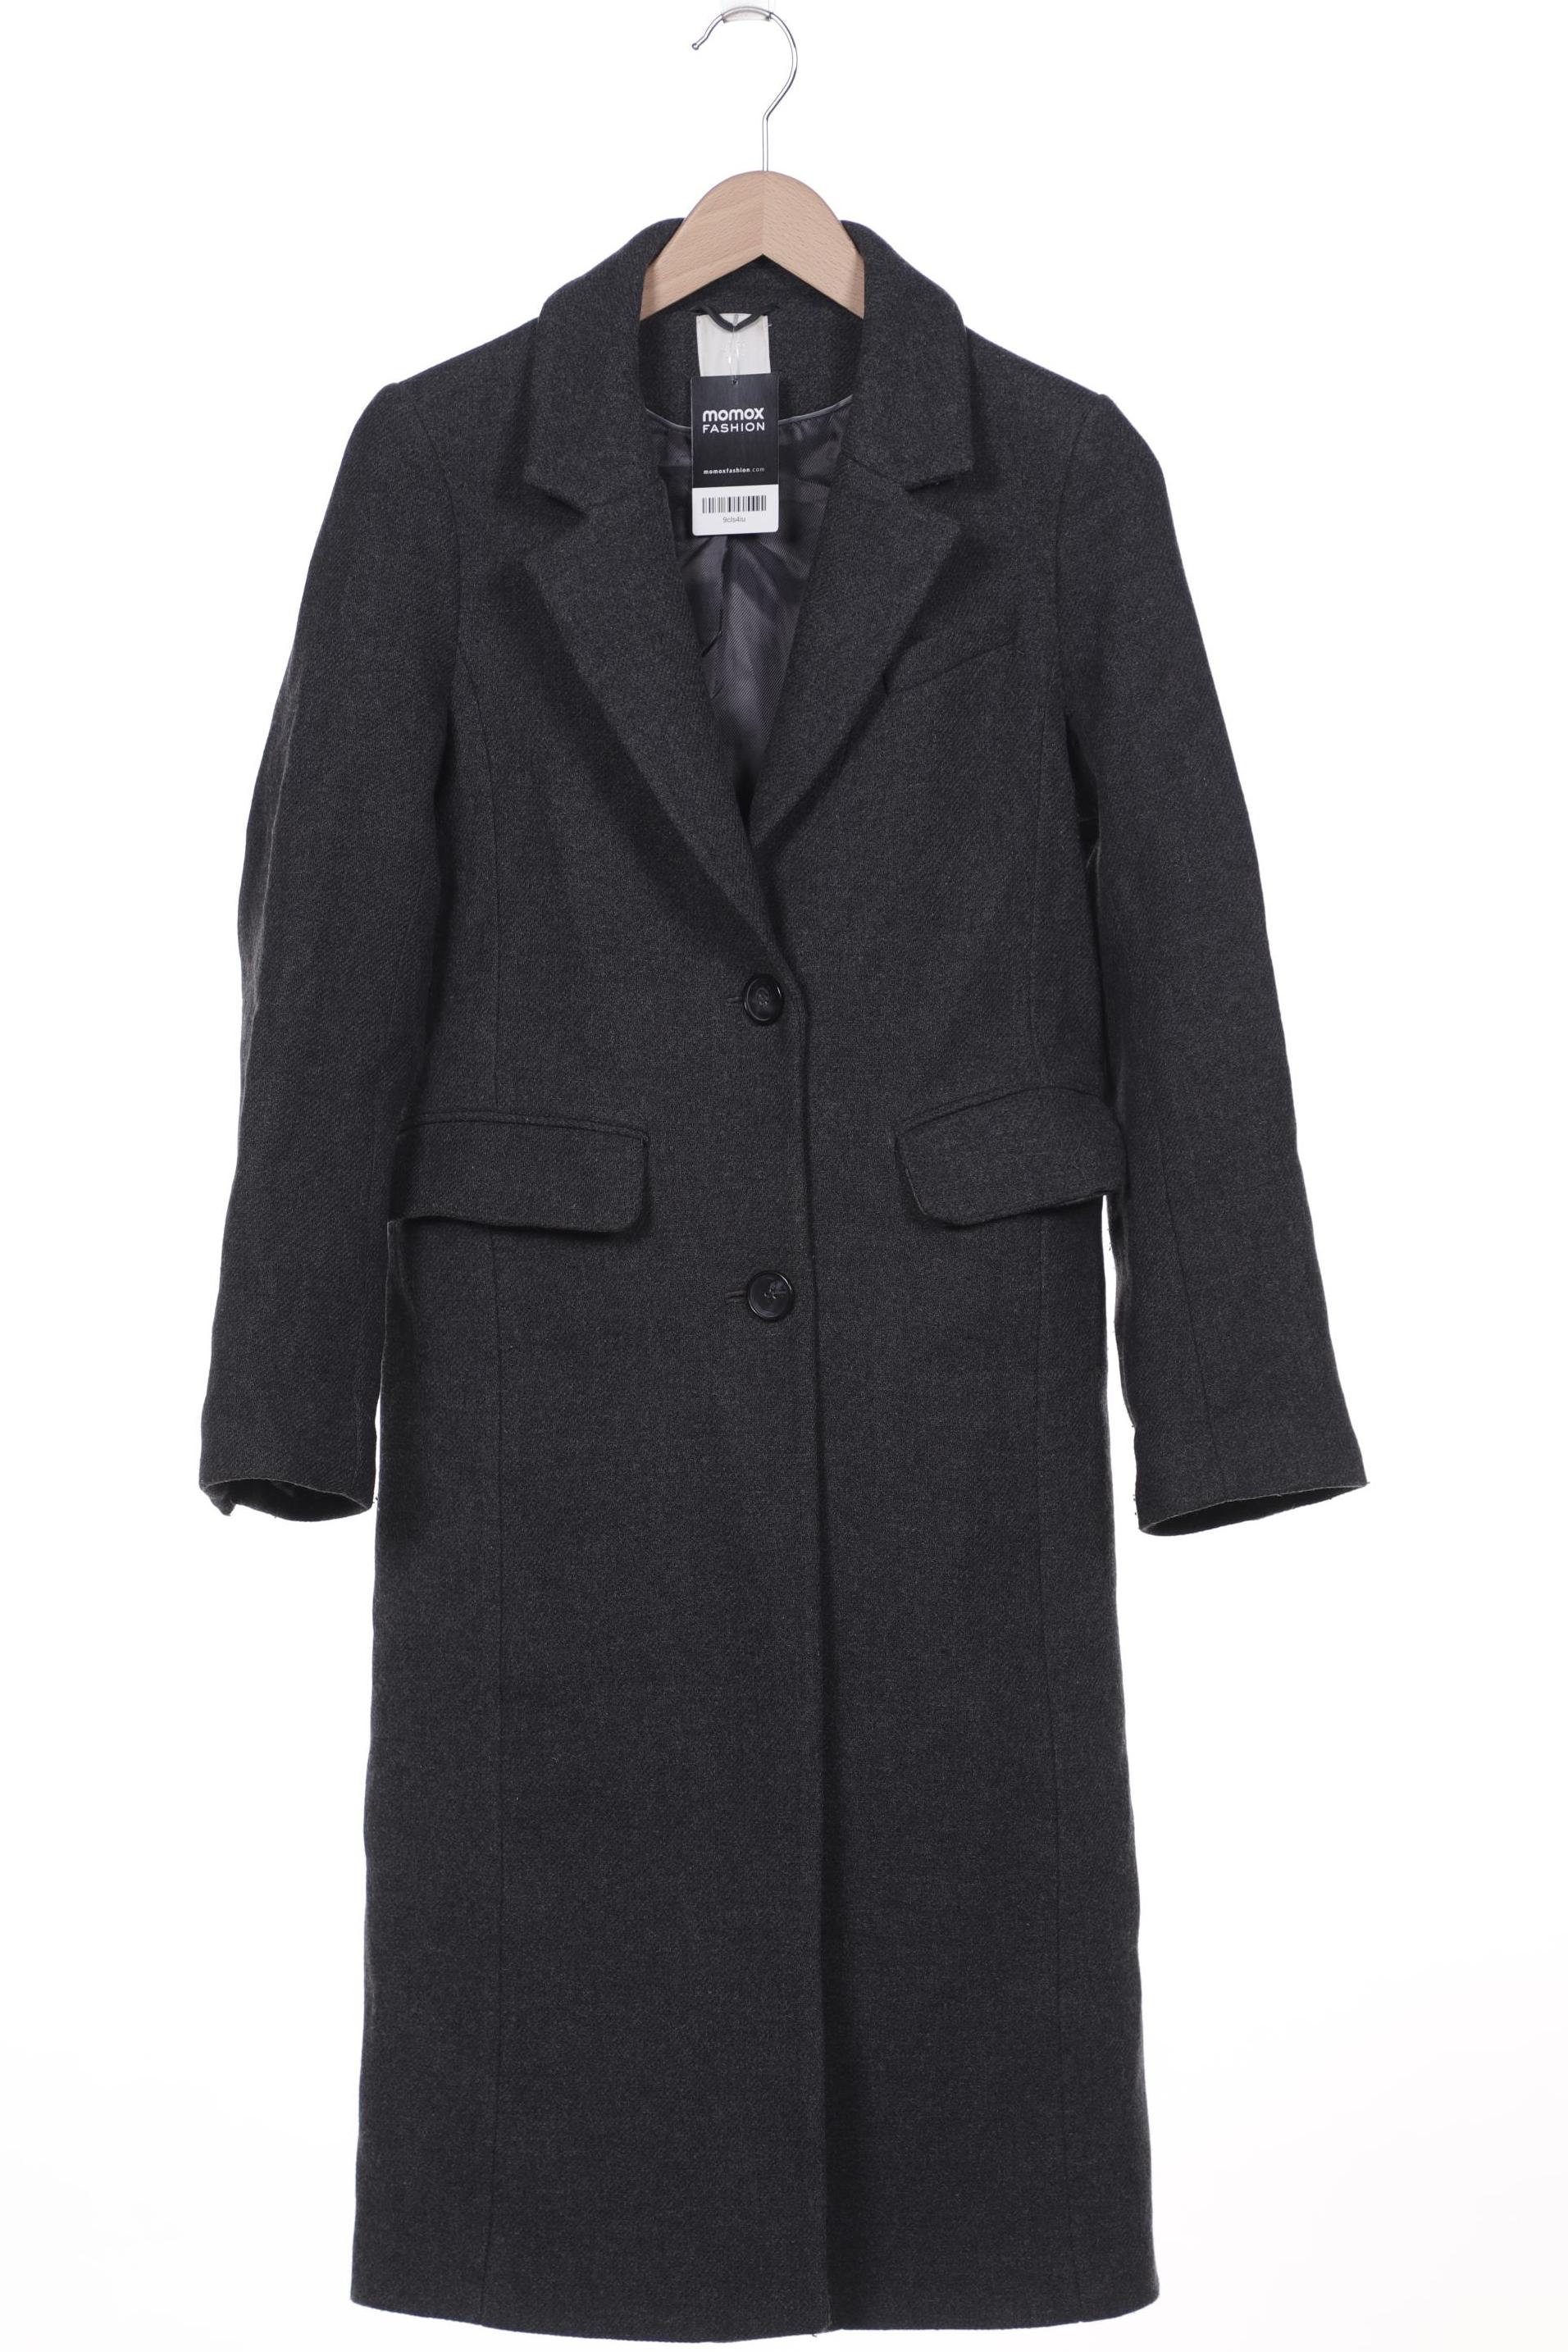 H&M Damen Mantel, grau, Gr. 34 von H&M